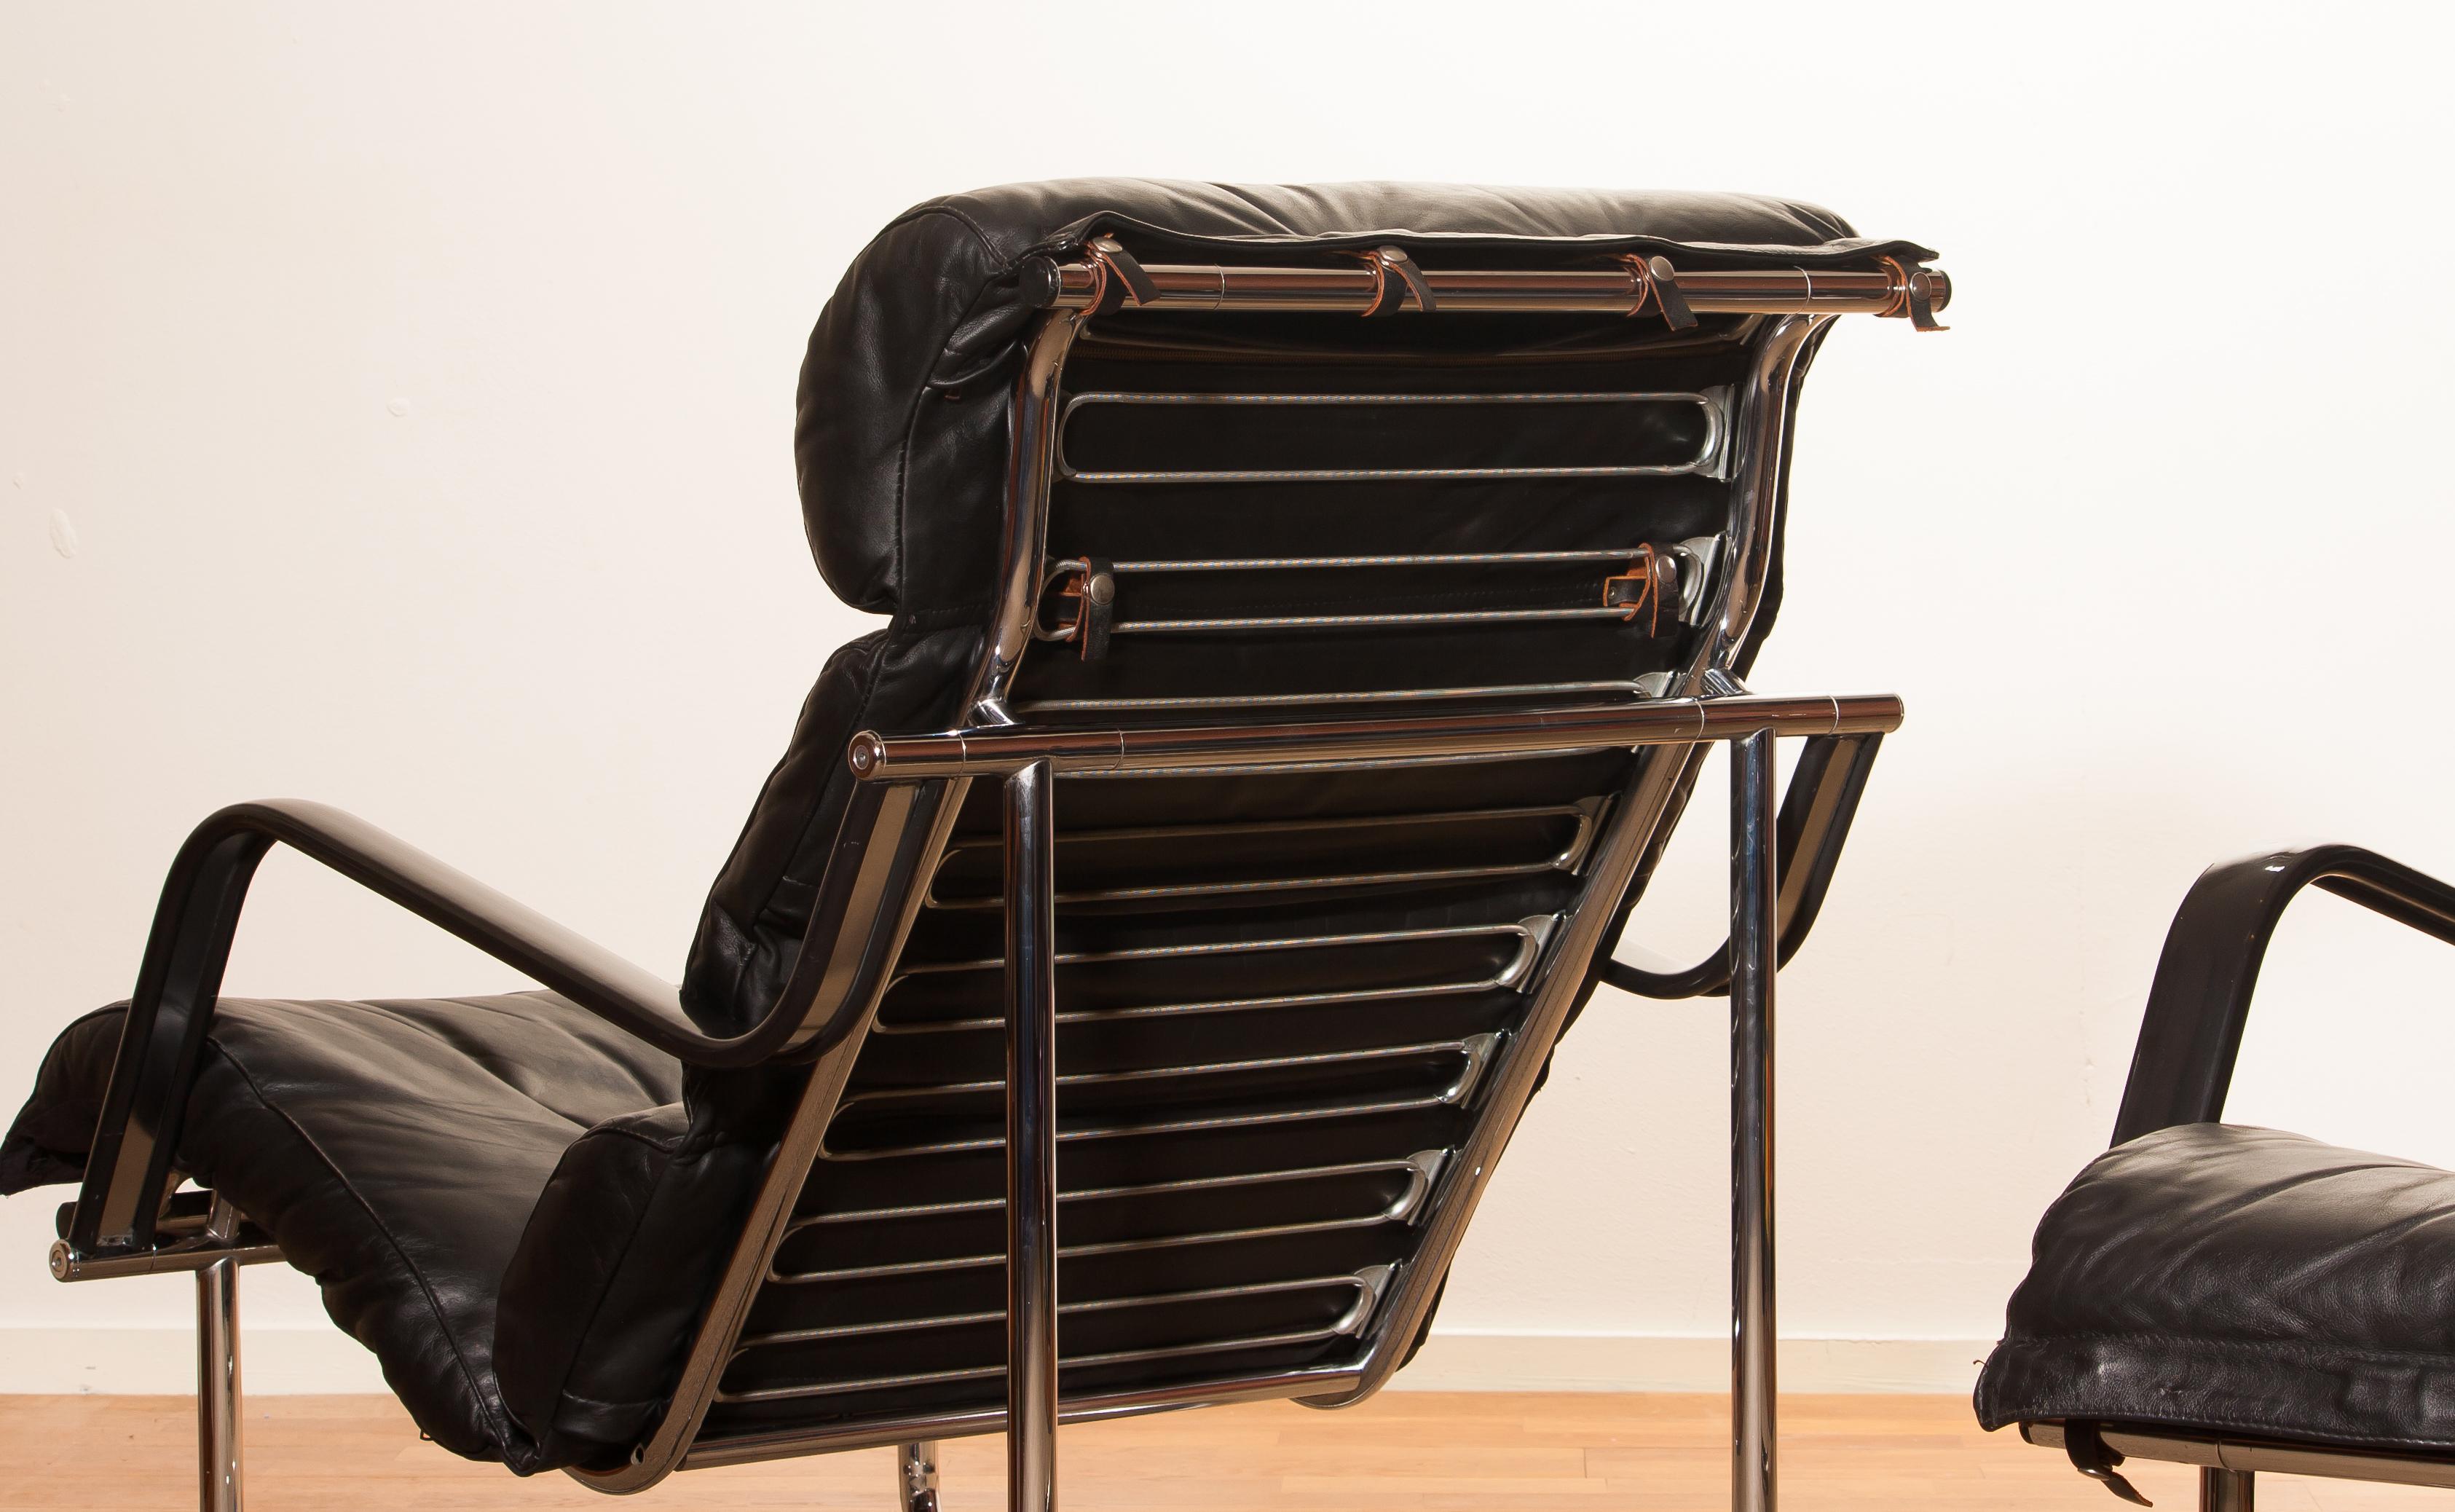 1970s, Set of Two Black Leather 'Remmie' Lounge Chairs, Yrjö Kukkapuro, Finland 2